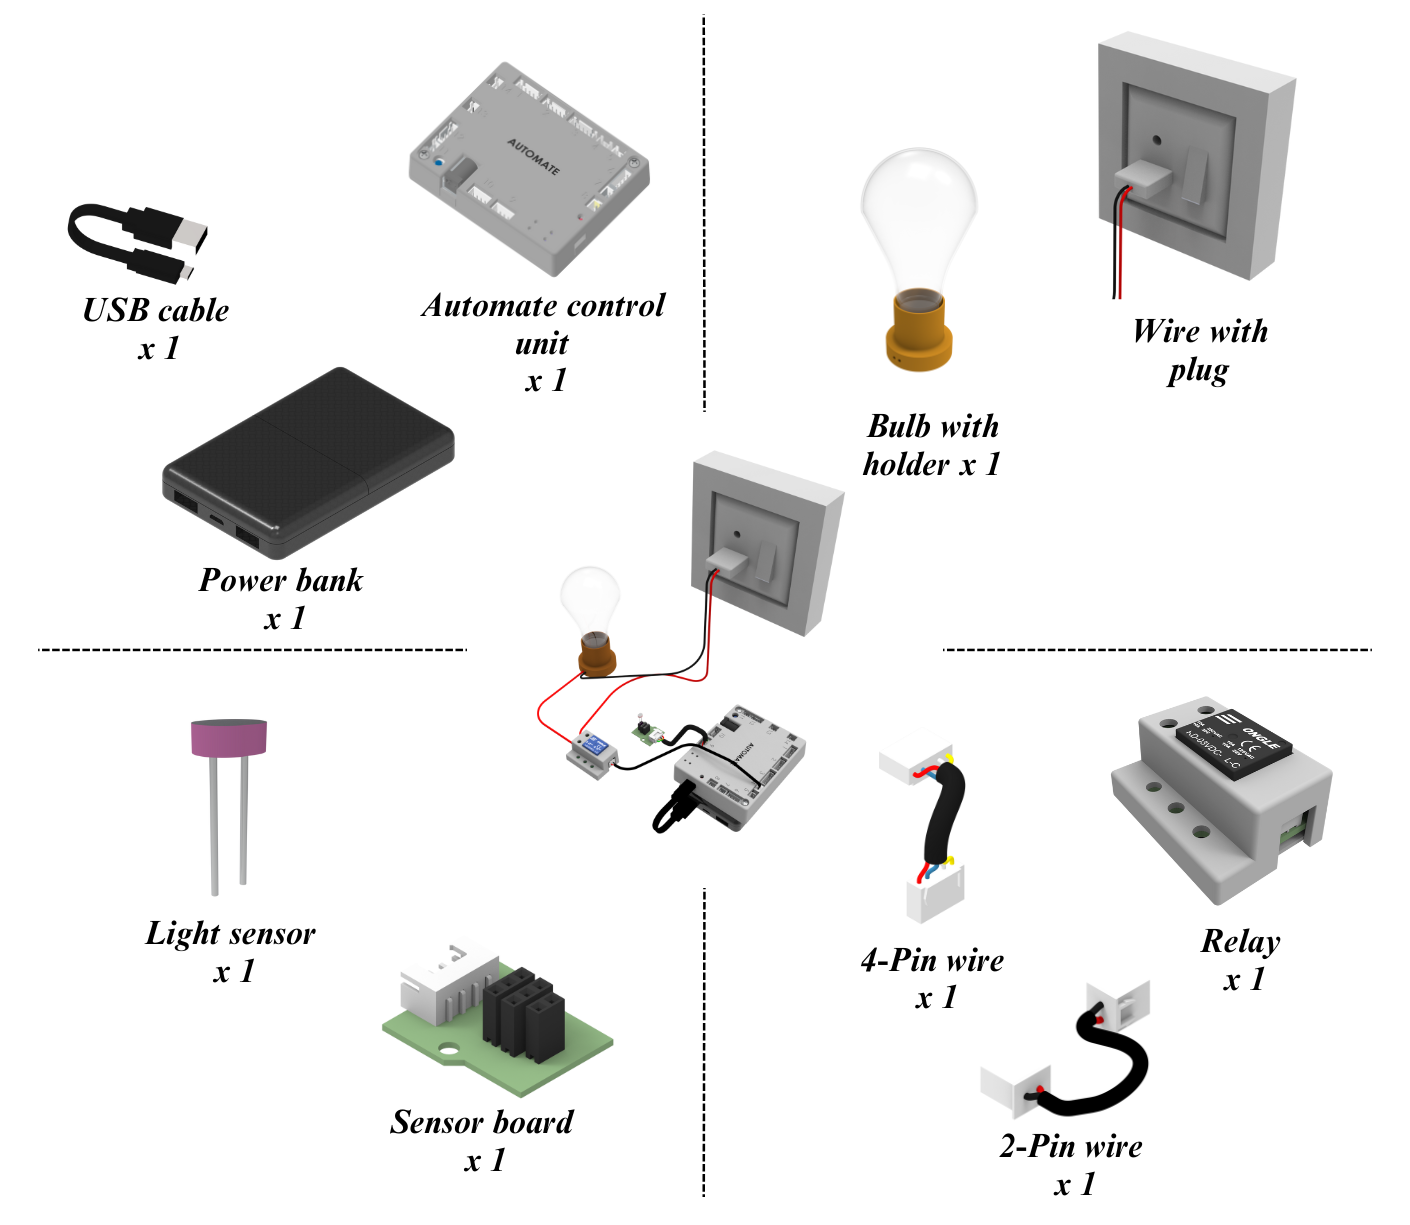 Light_bulb_on_off_with_Light_sensor_list_of_items